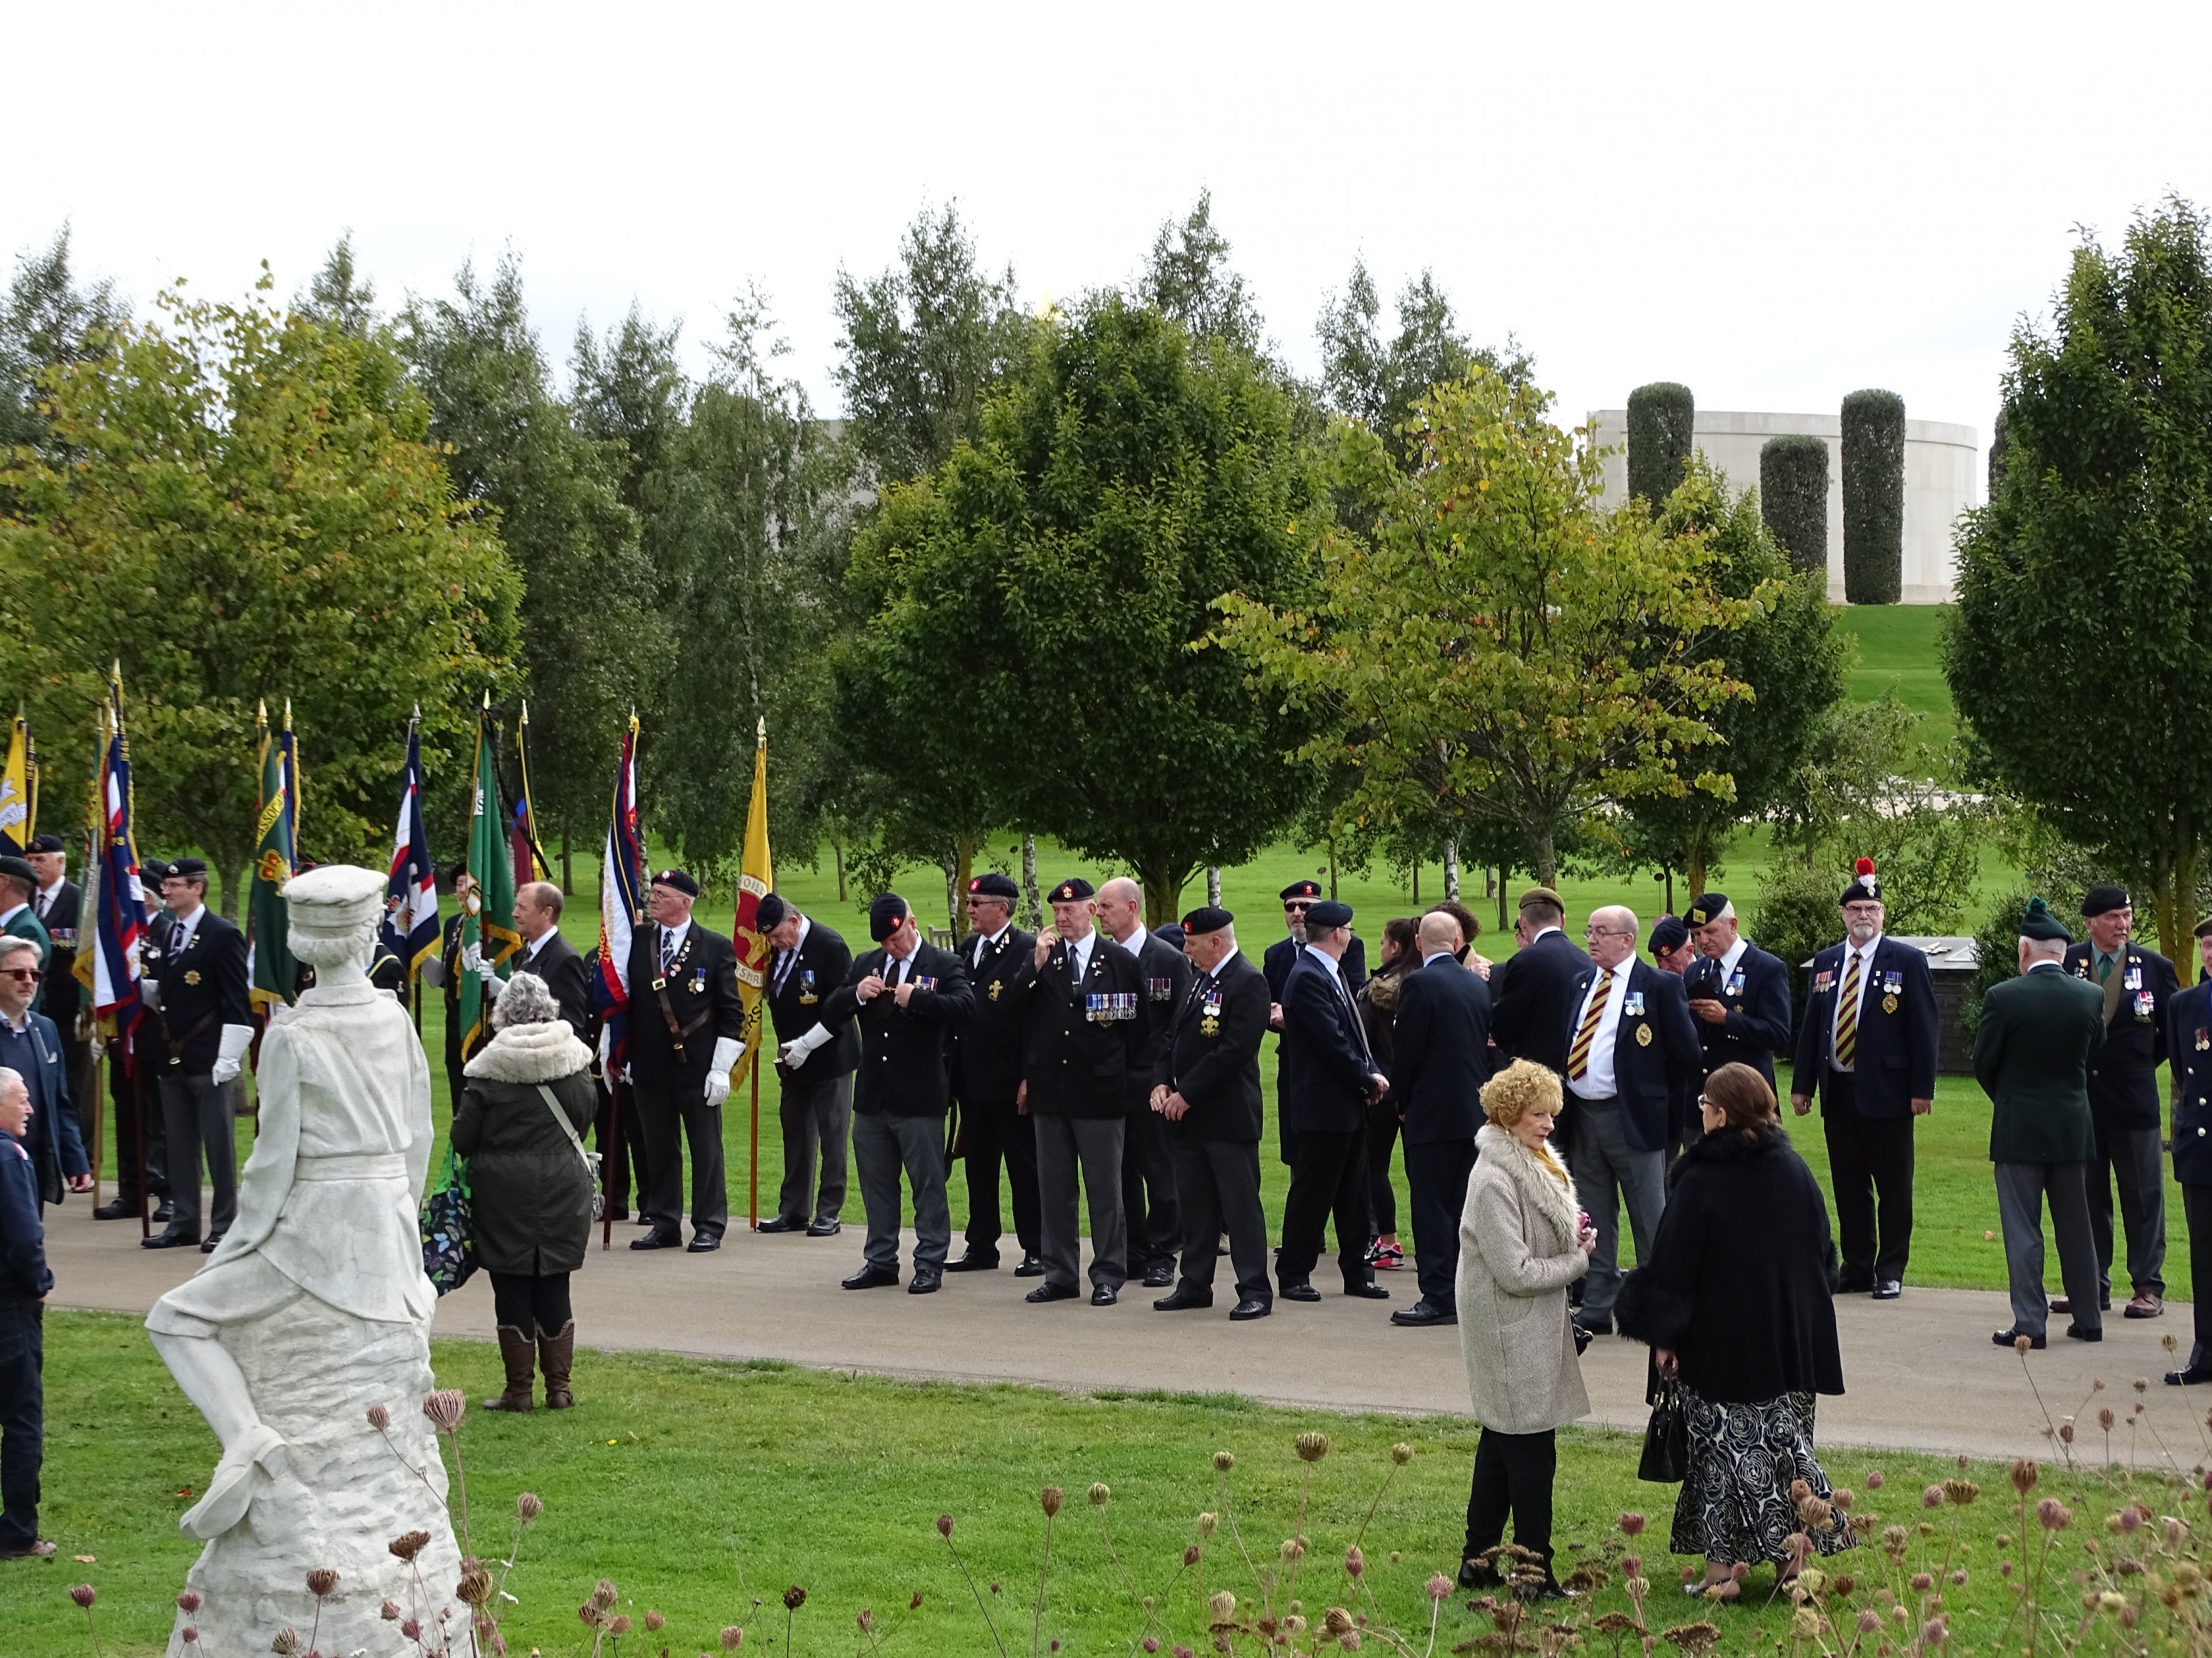 Northern Ireland Veterans Parade, National Memorial Arboretum, Alrewas, Staffs. 16.9.2017